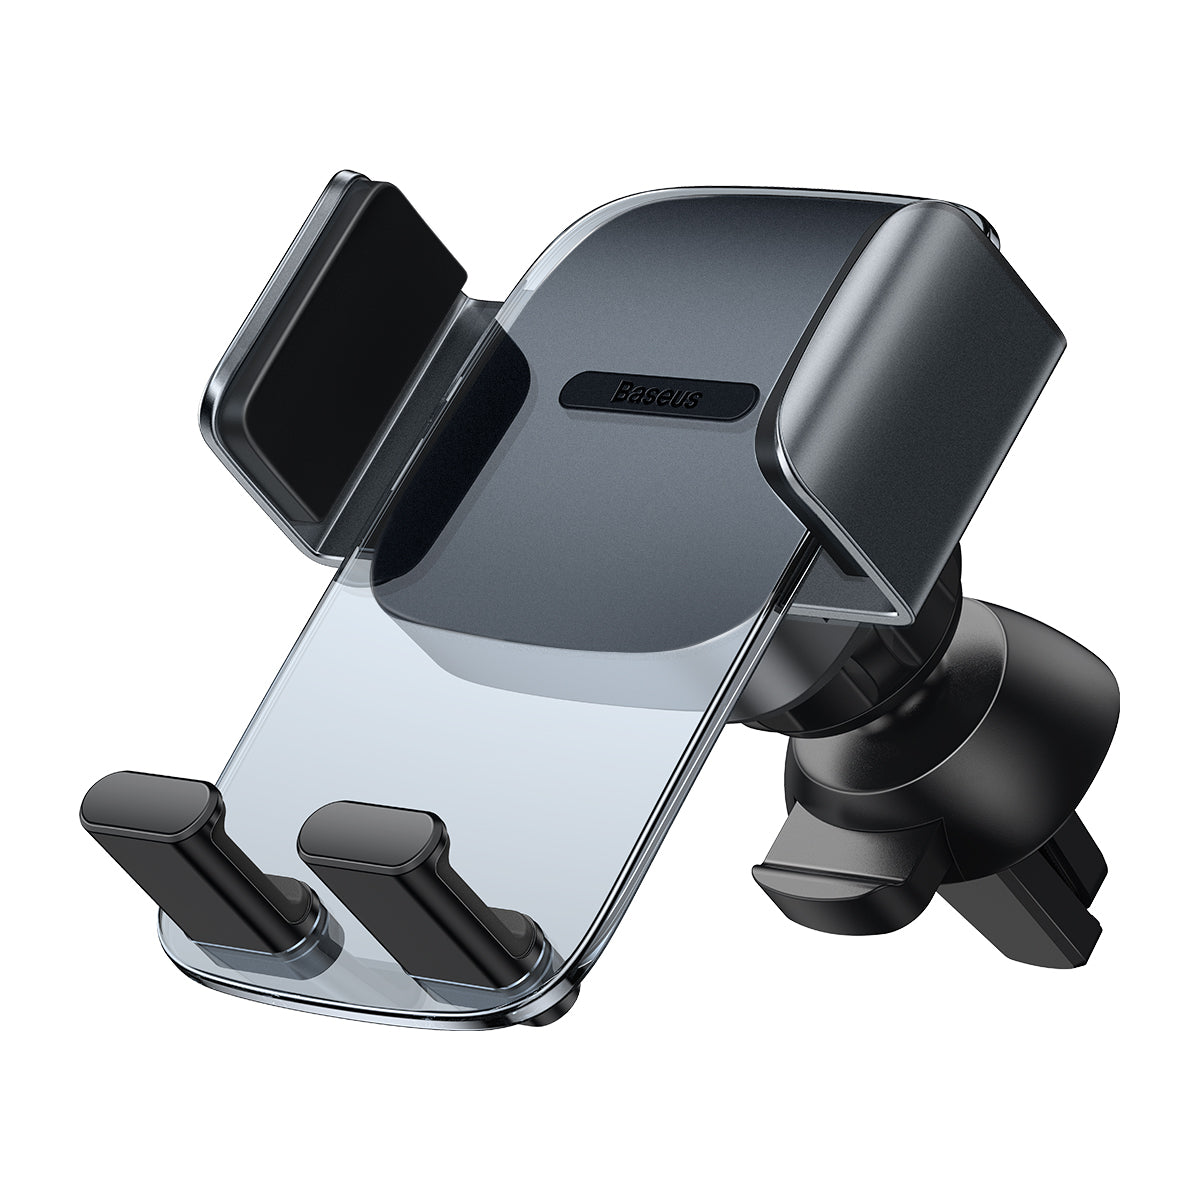 Baseus Easy Control Clamp Car Mount Holder for Smartphones (A Set) - Black